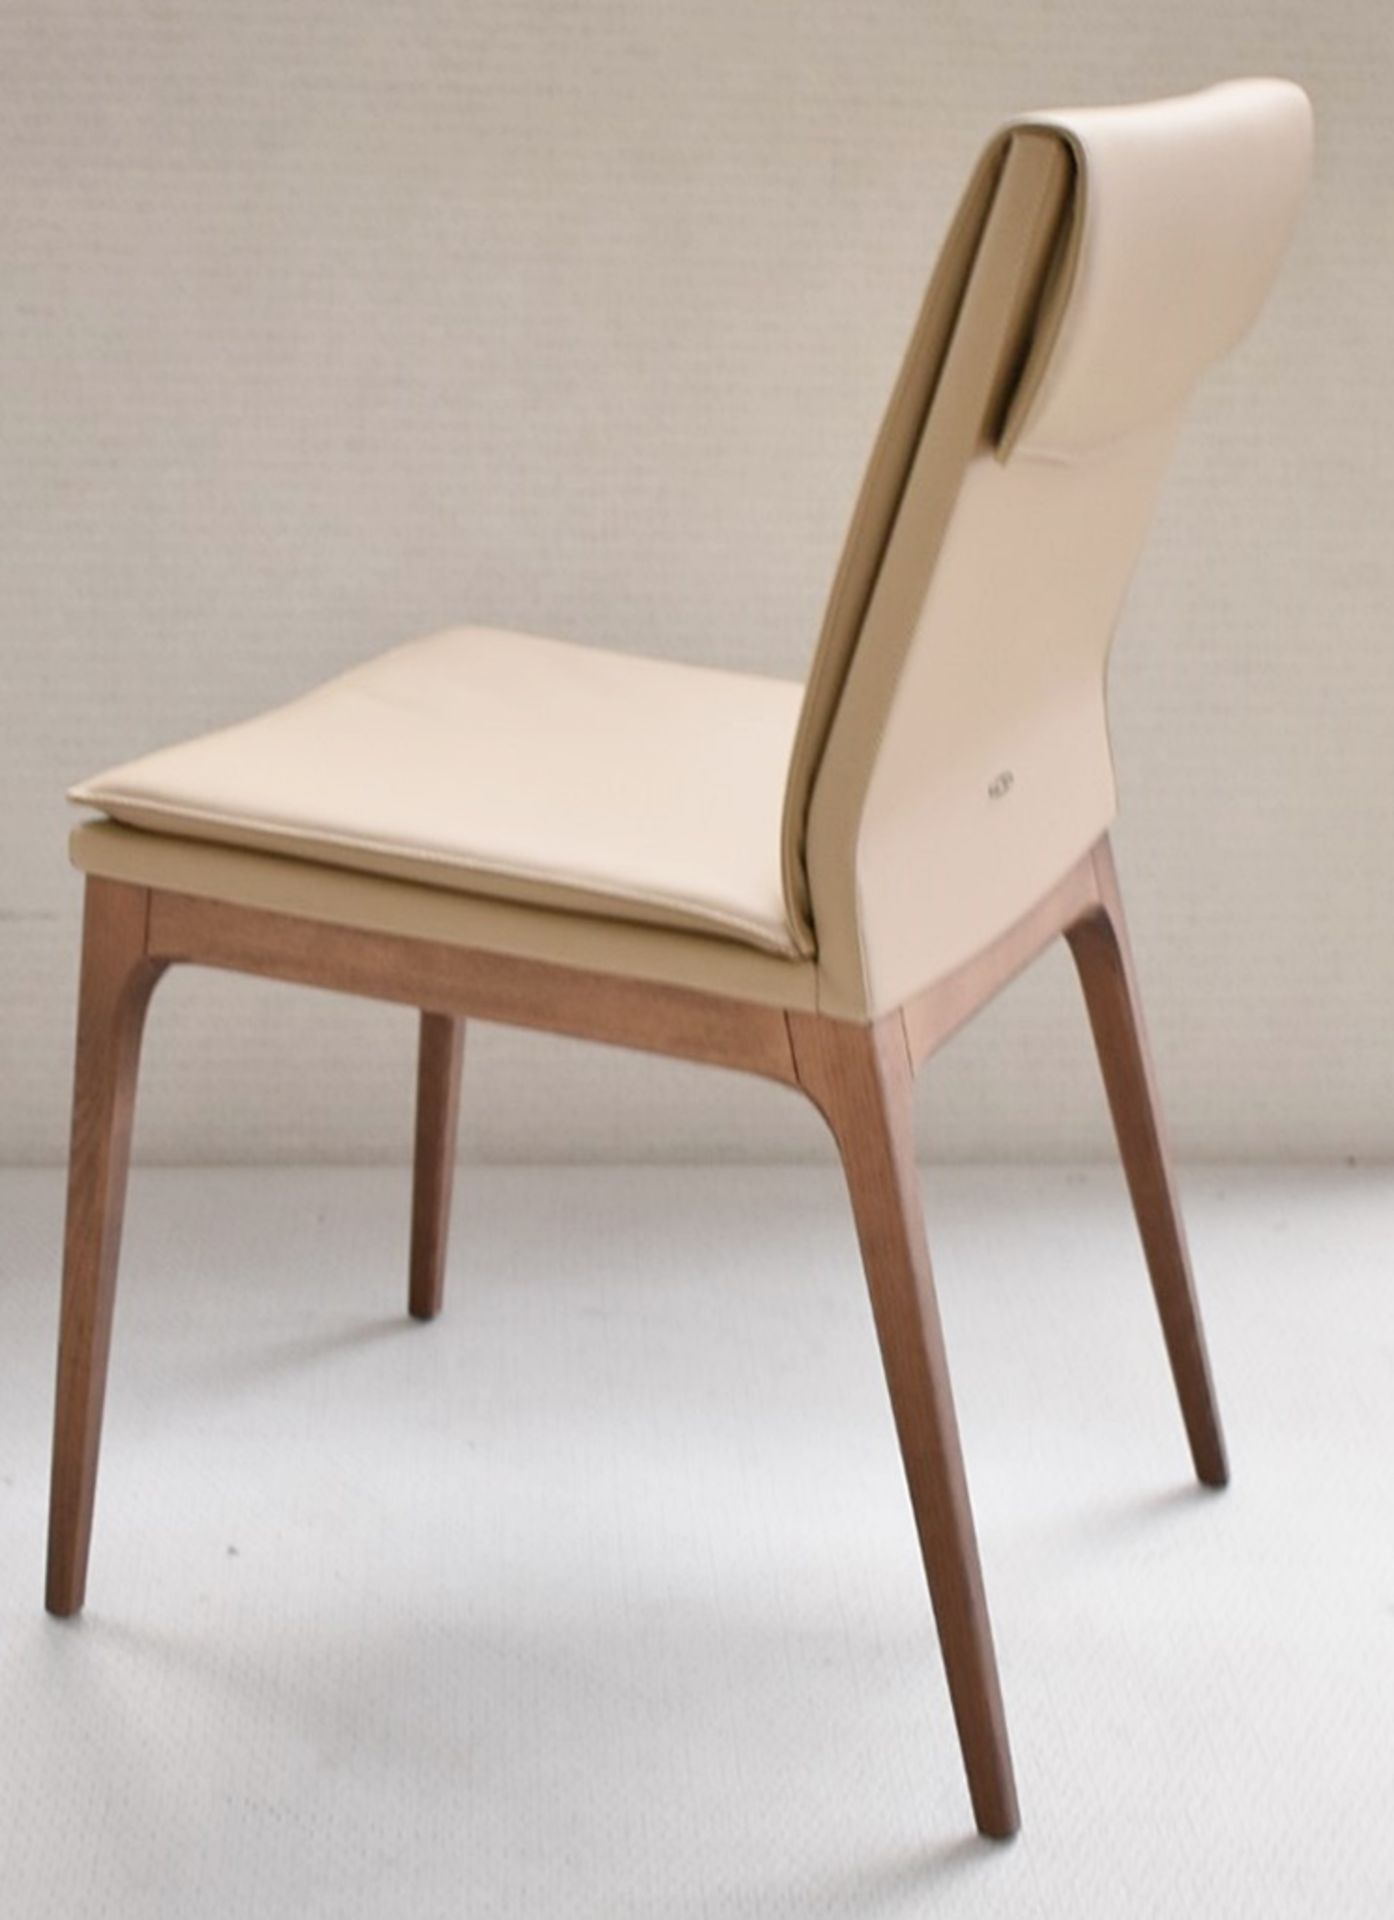 1 x CATTELAN ITALIA 'Sofia' Leather Upholsted Designer Chair - Original RRP £520.00 - Ref: 4934658/ - Image 5 of 9